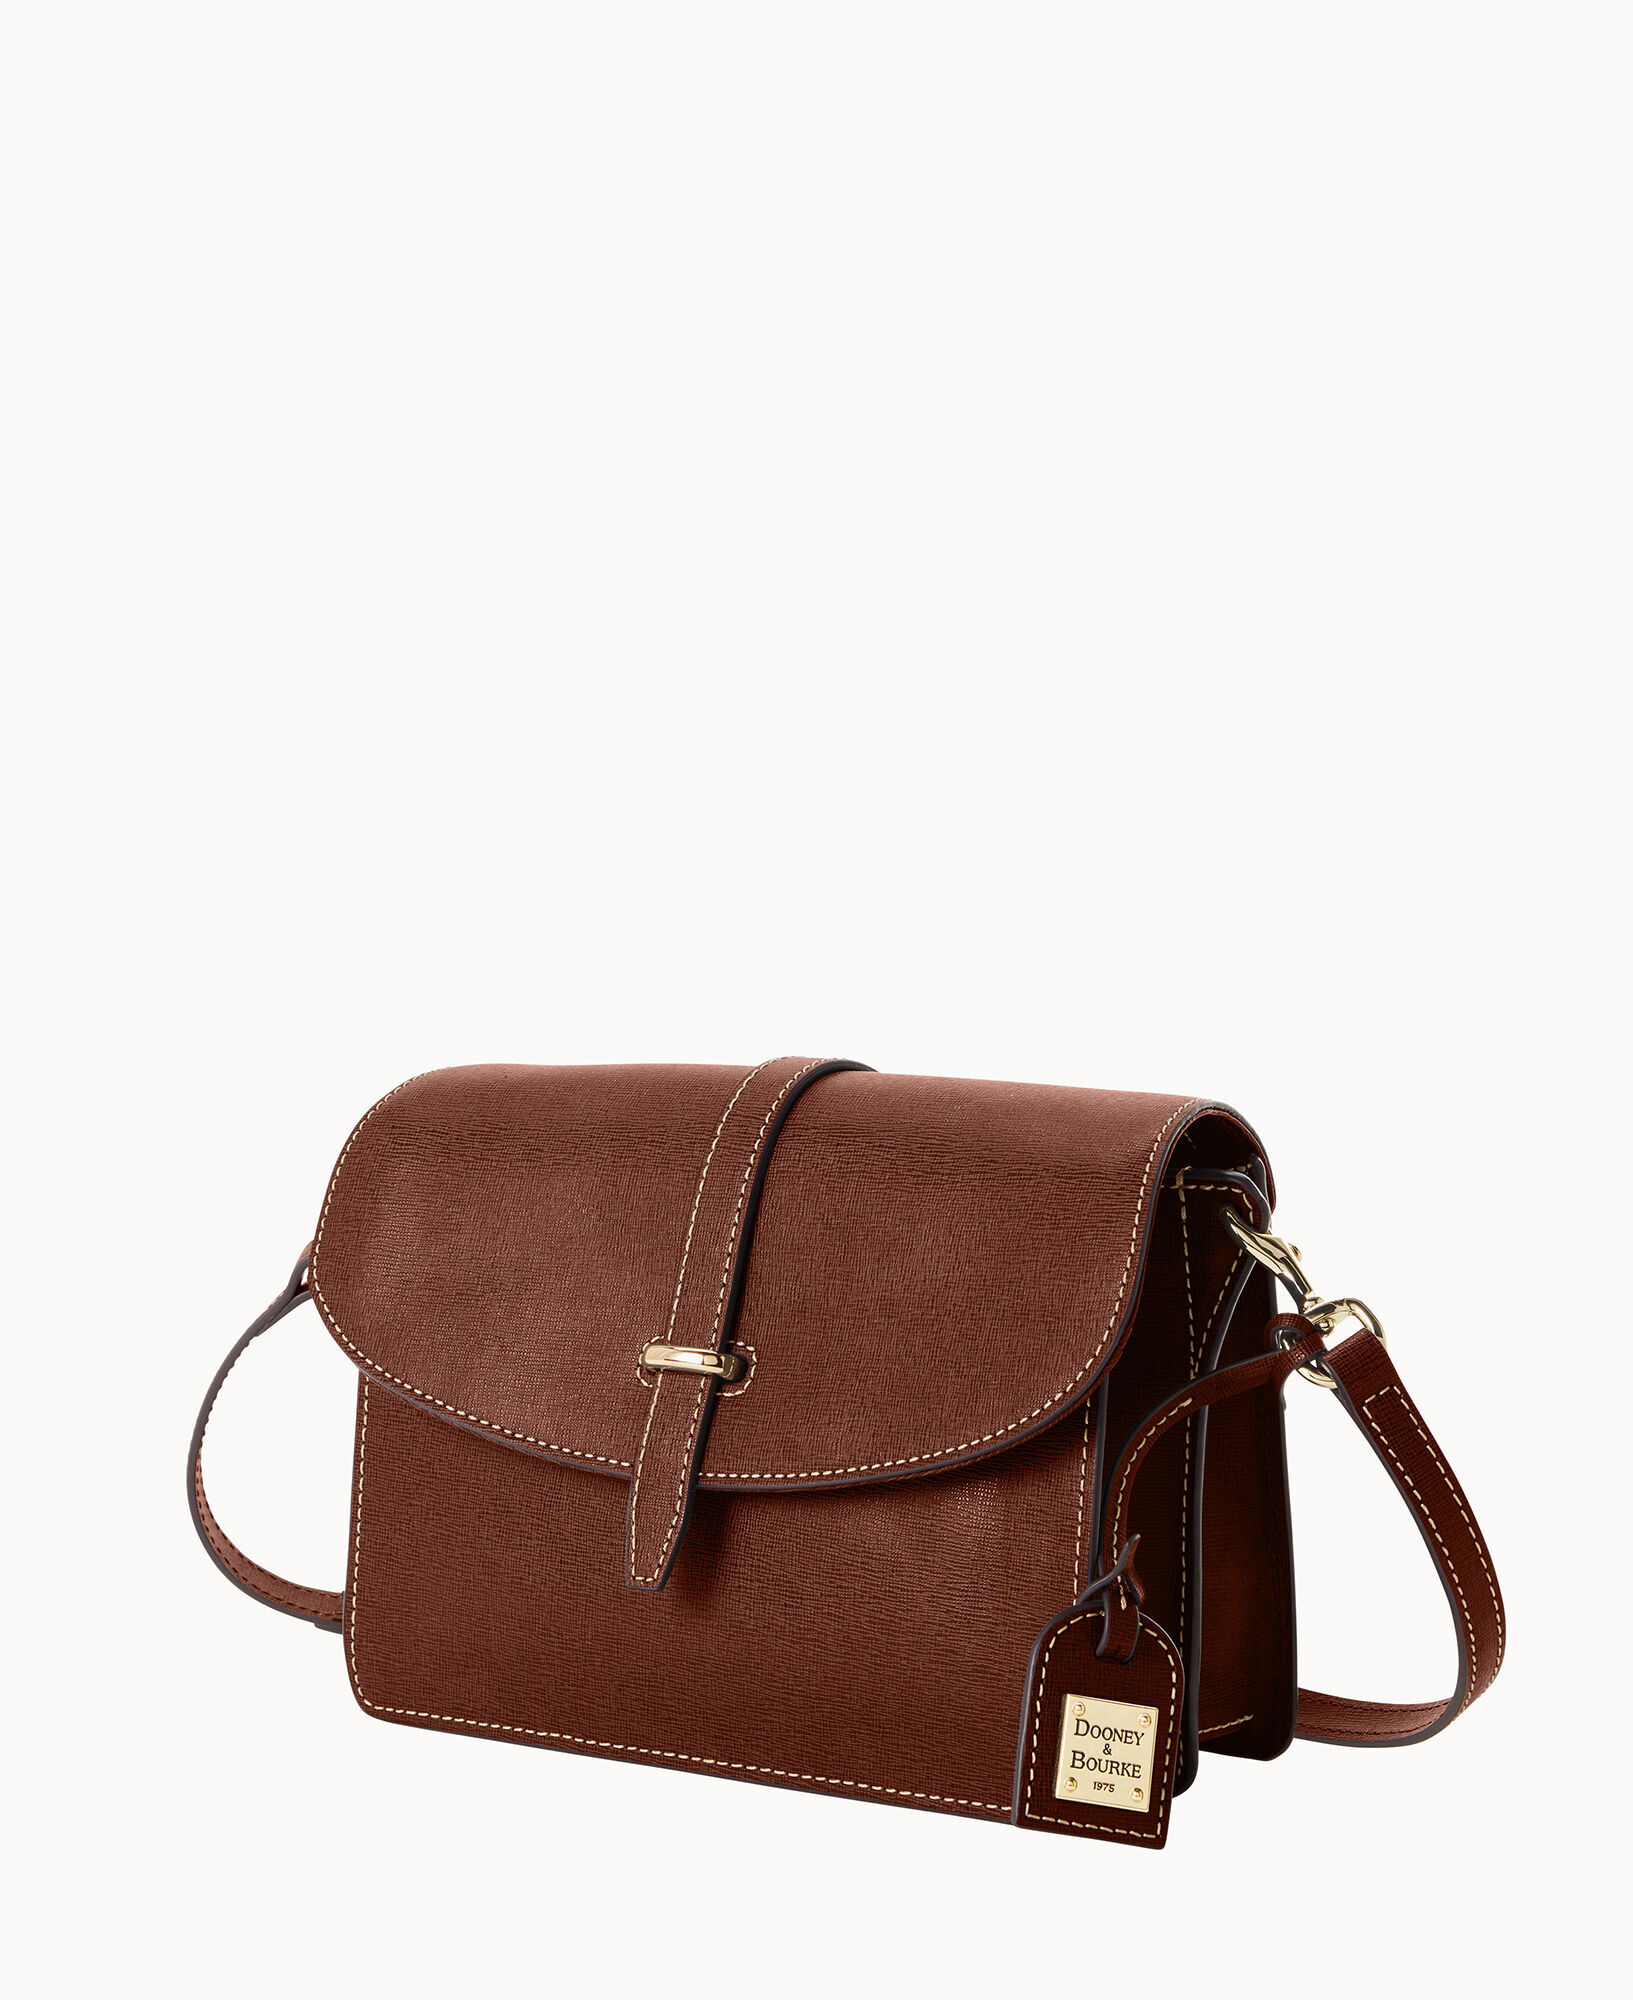 Dooney & Bourke Saffiano Small Crossbody Shoulder Bag